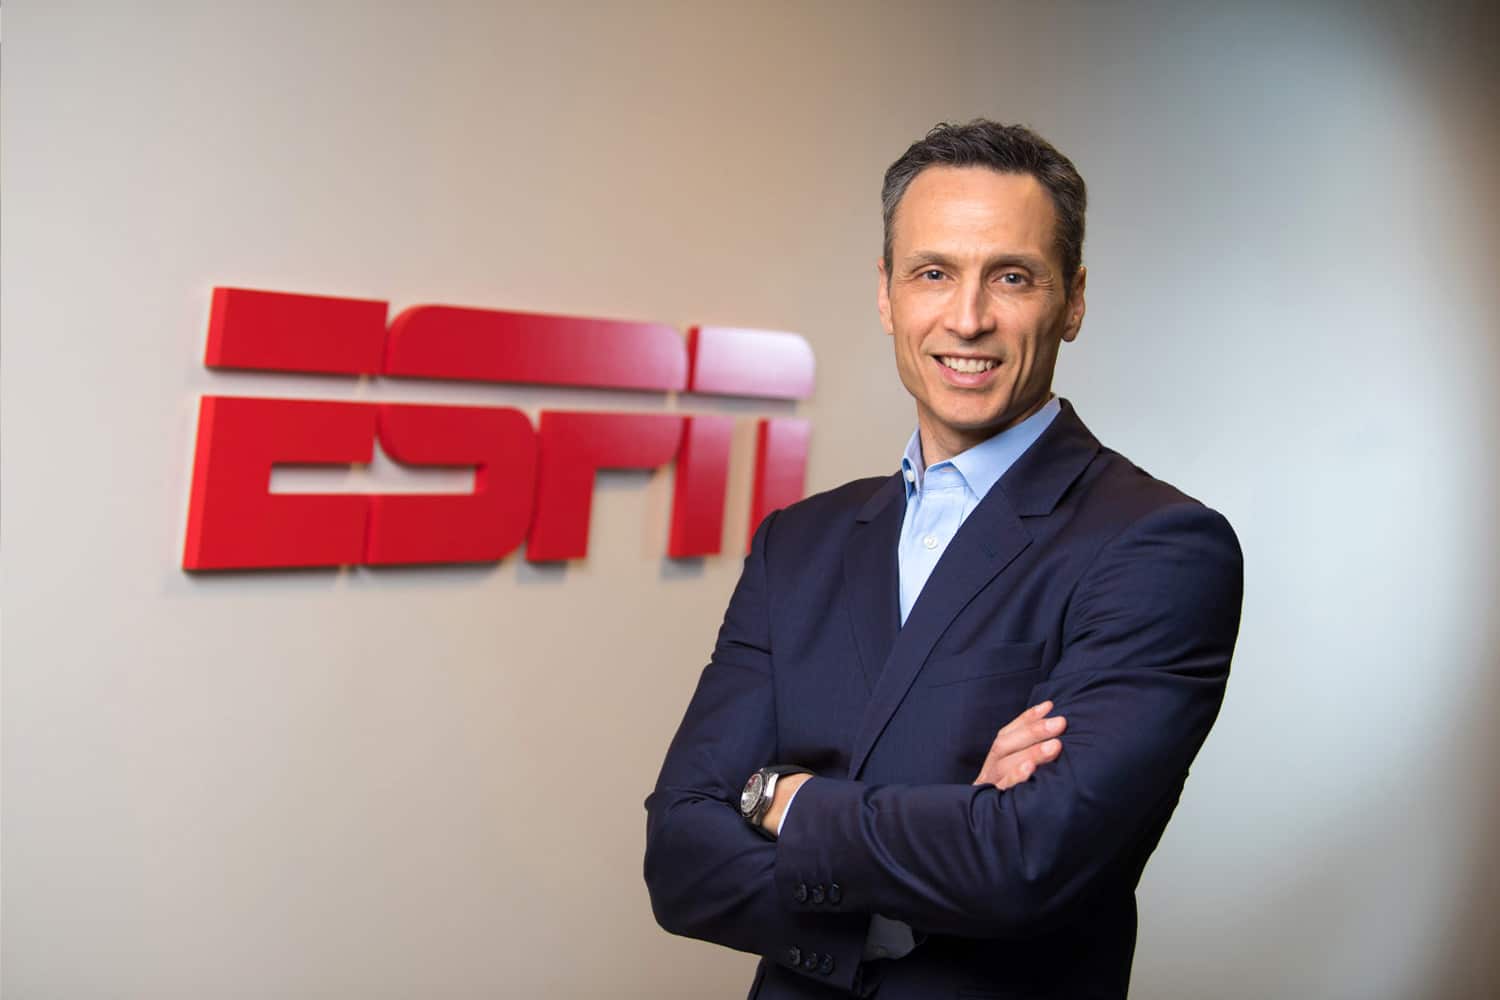 Jimmy Pitaro of ESPN